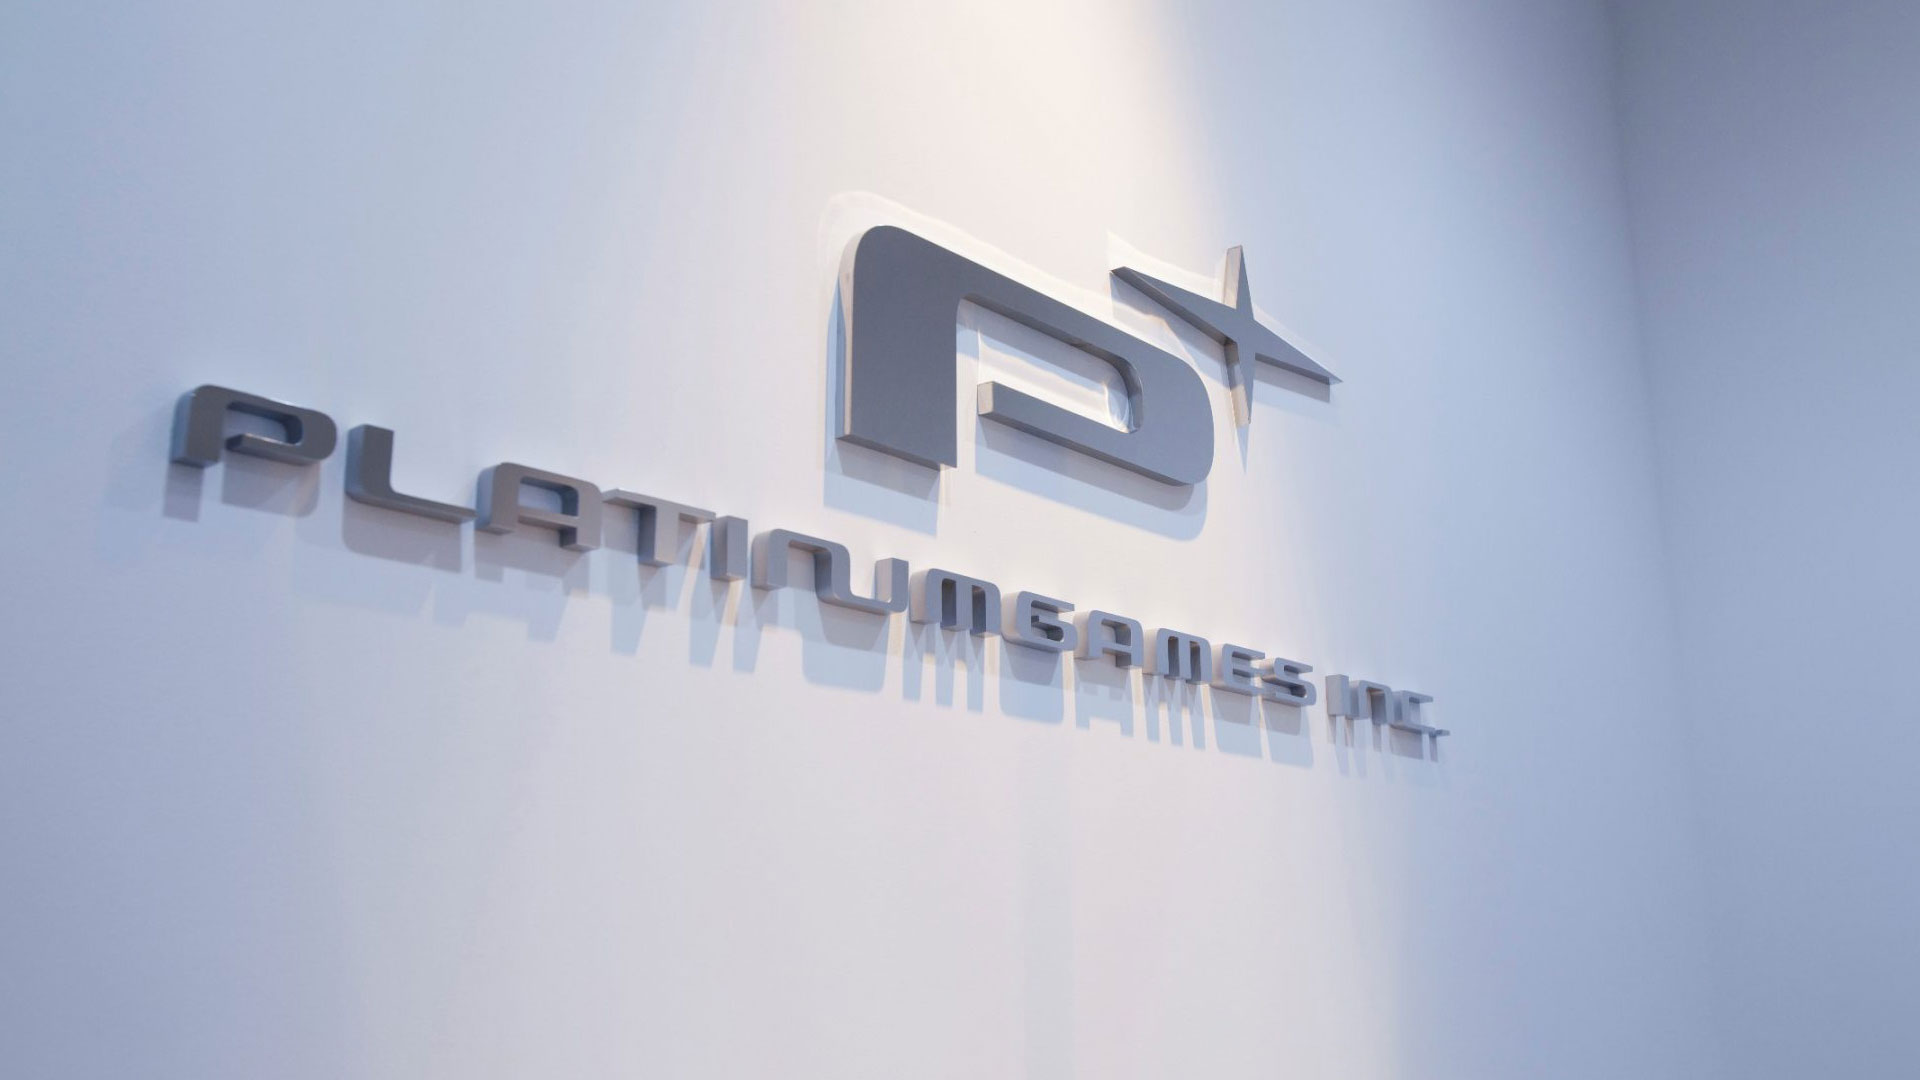 PlatinumGames' Hideki Kamiya is leaving the company on October 12